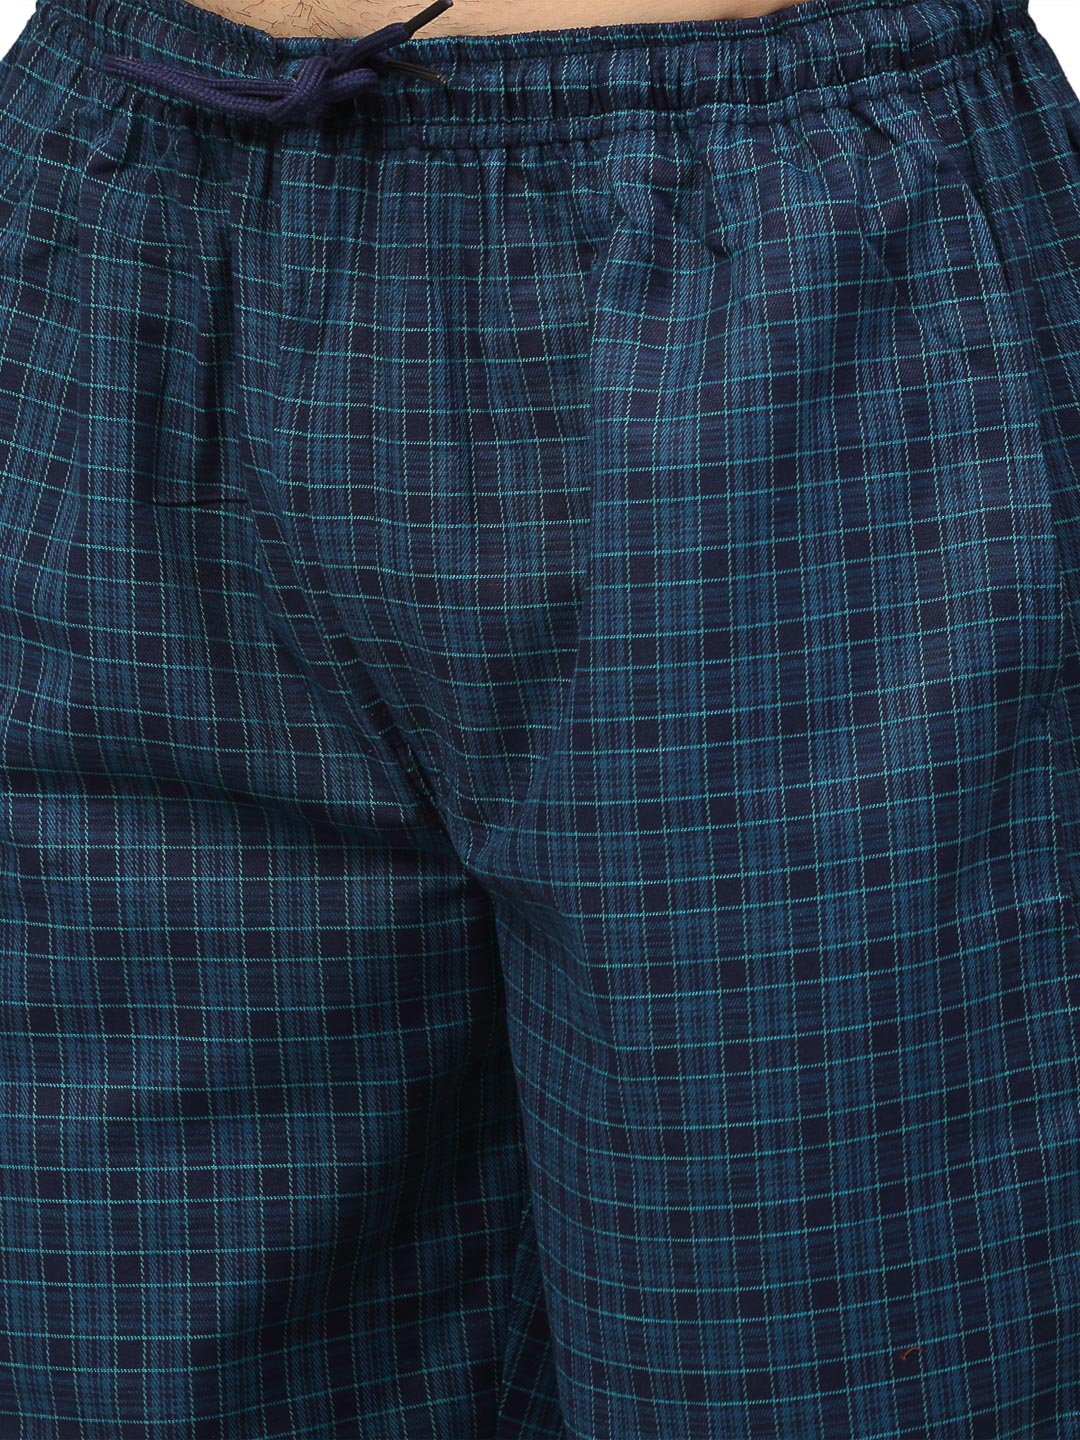 Jainish Men's Blue Cotton Checked Track Pants ( JOG 017Blue )